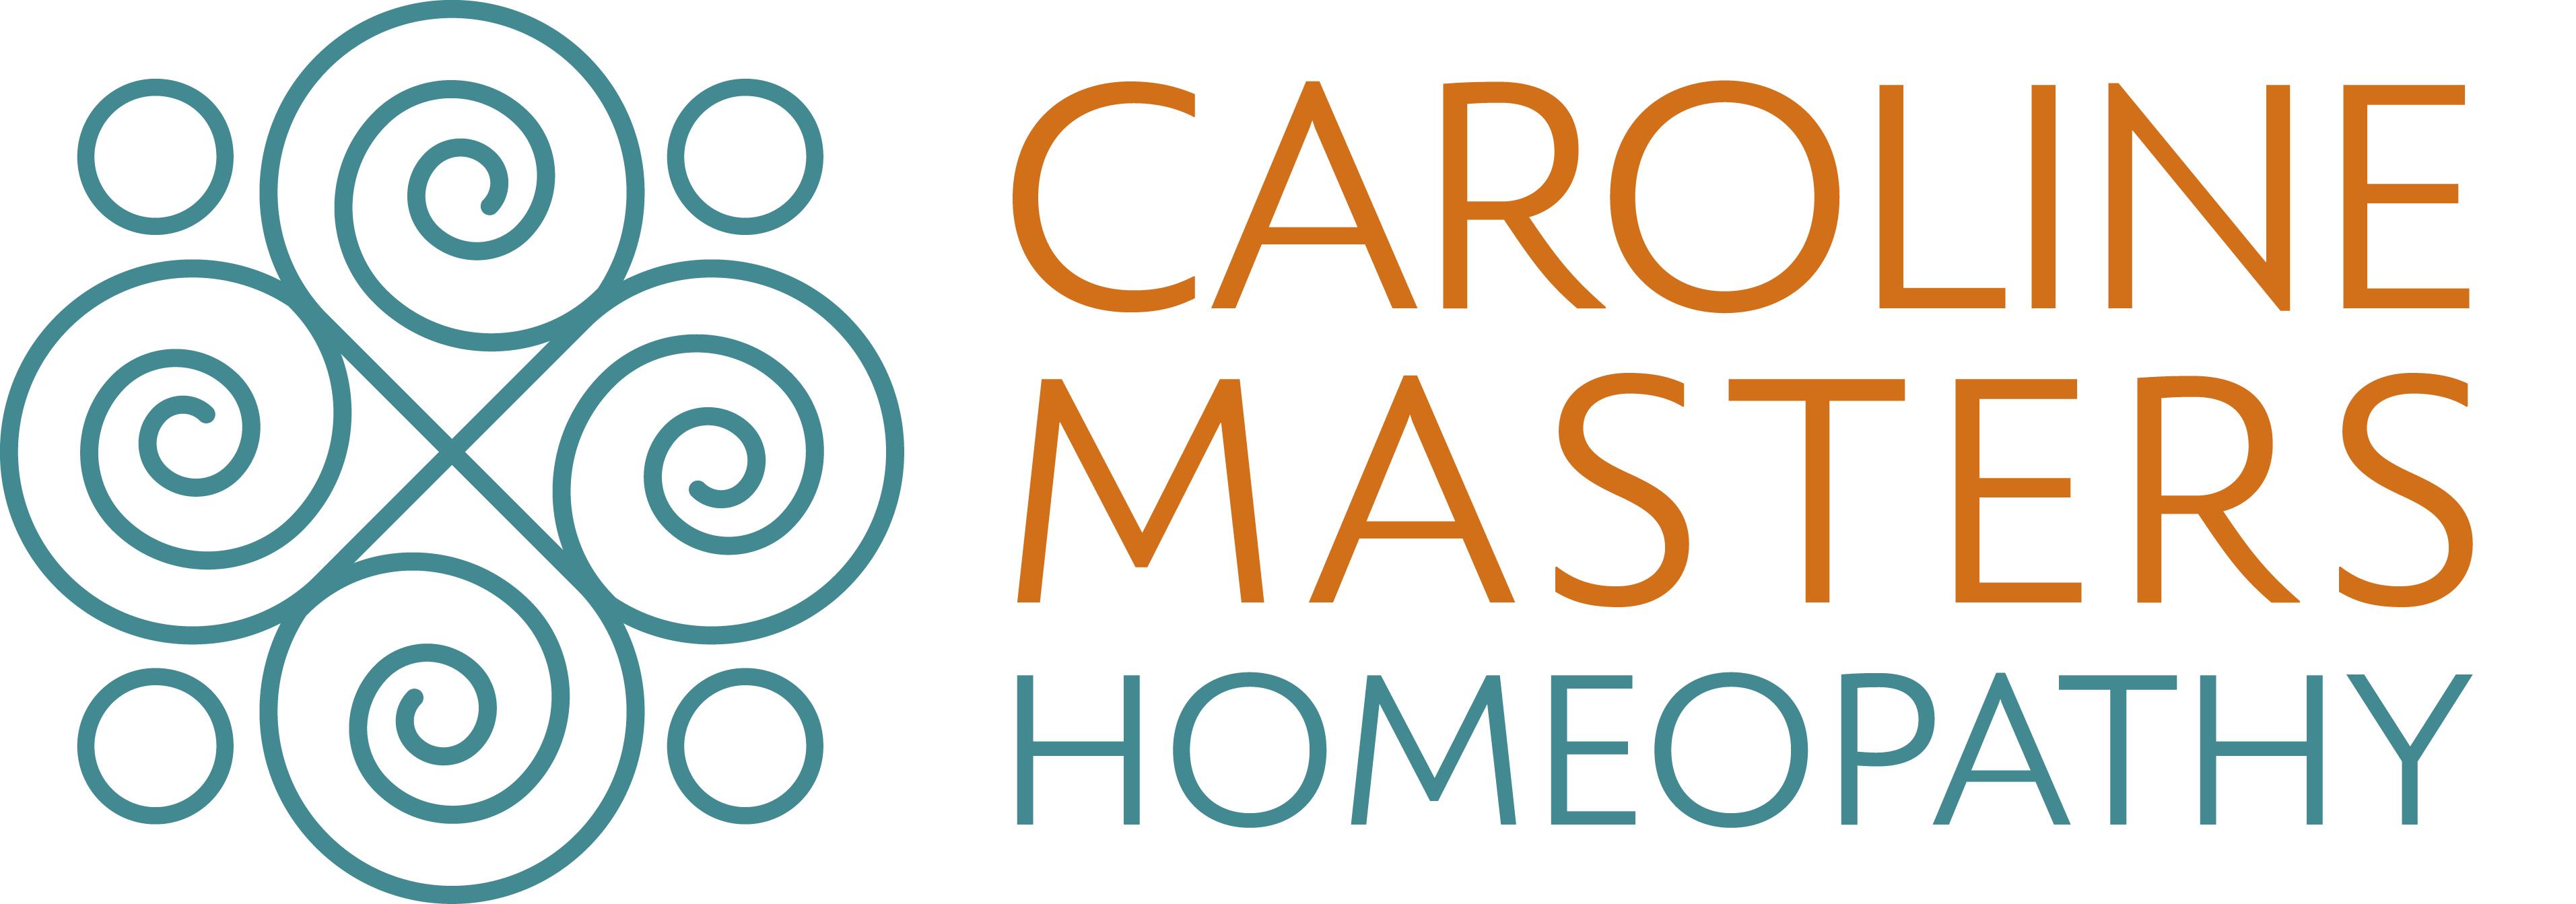 Caroline Masters Homeopathy